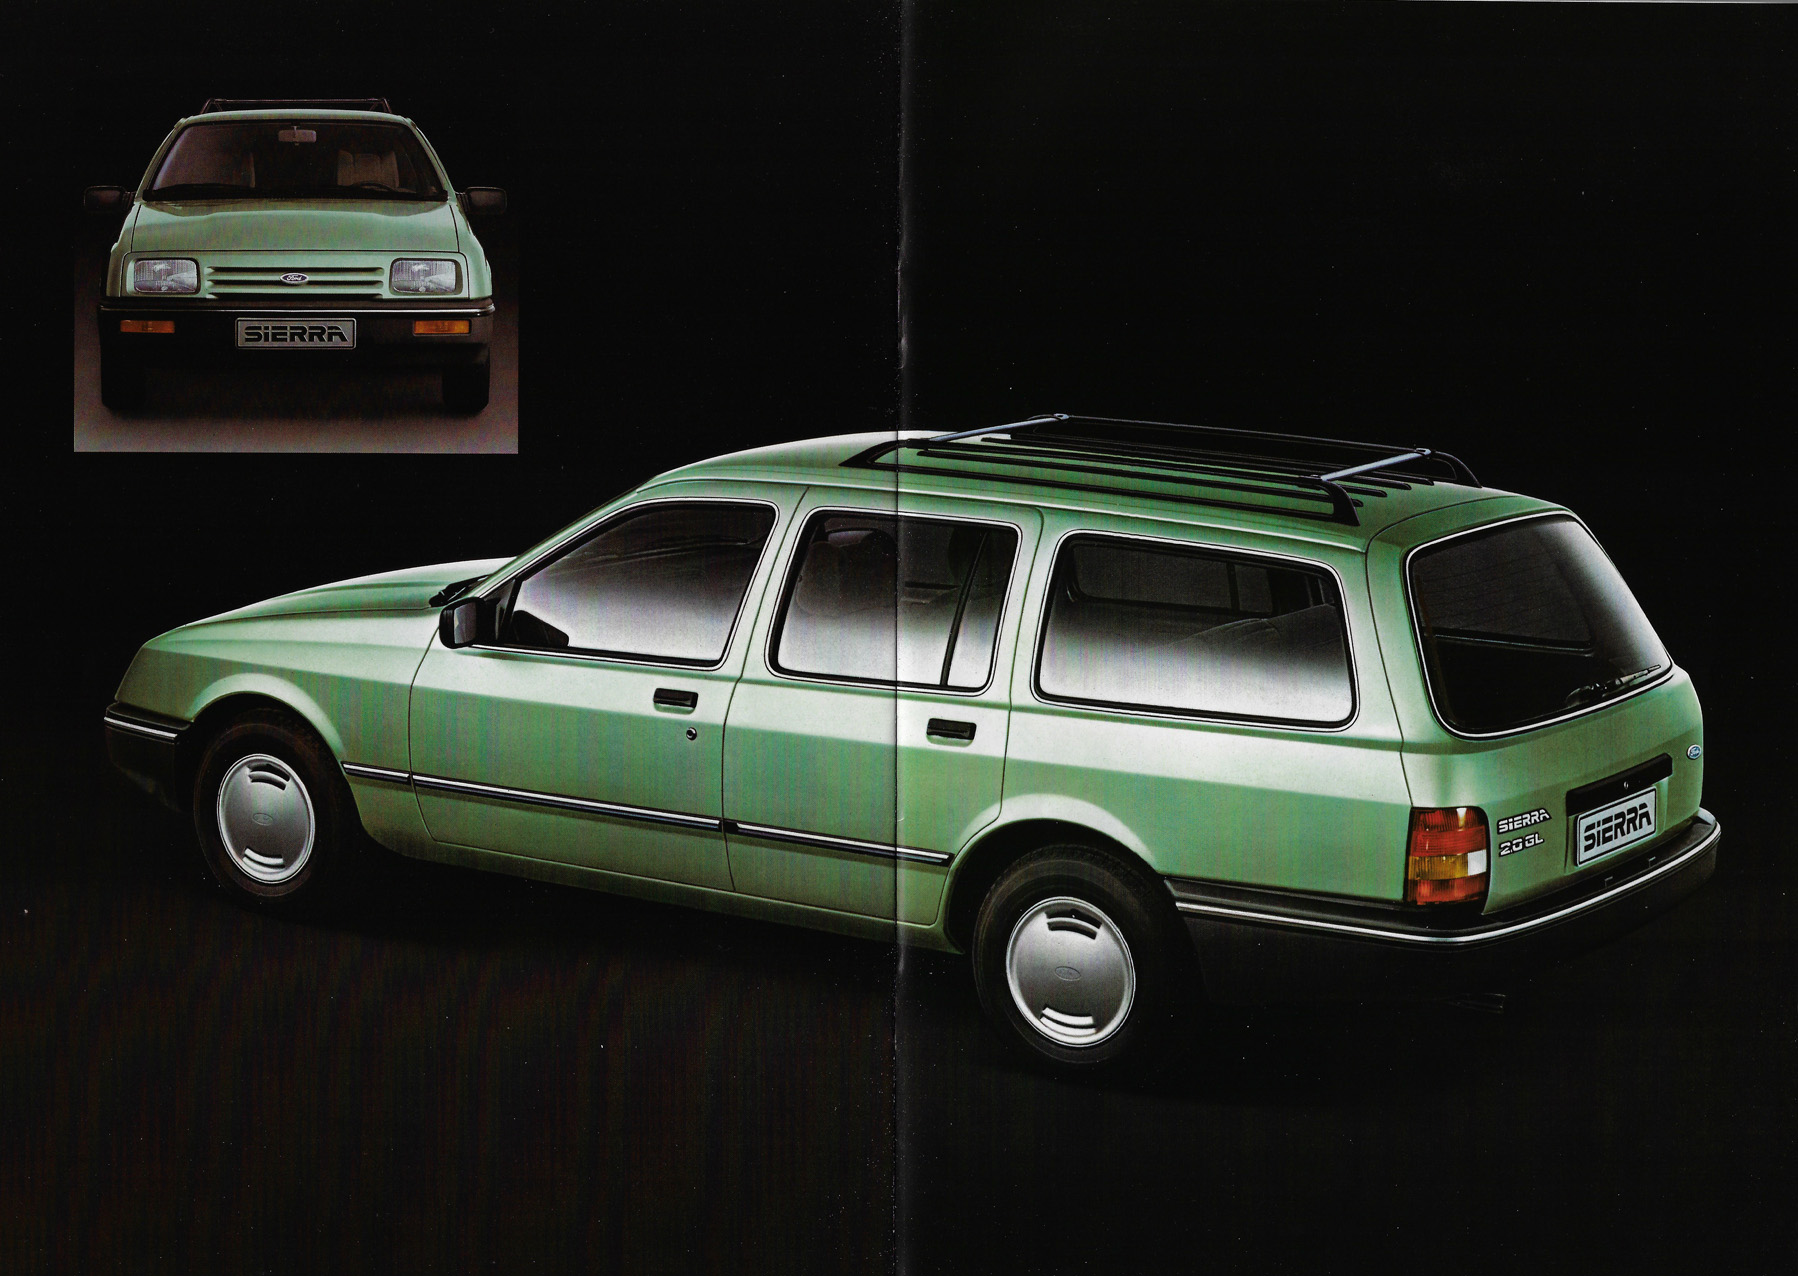 Сигнал 1 универсал. Ford Sierra универсал 1986. Форд Сиерра универсал 1987. Ford Sierra 1988 универсал. Ford Sierra 1983.